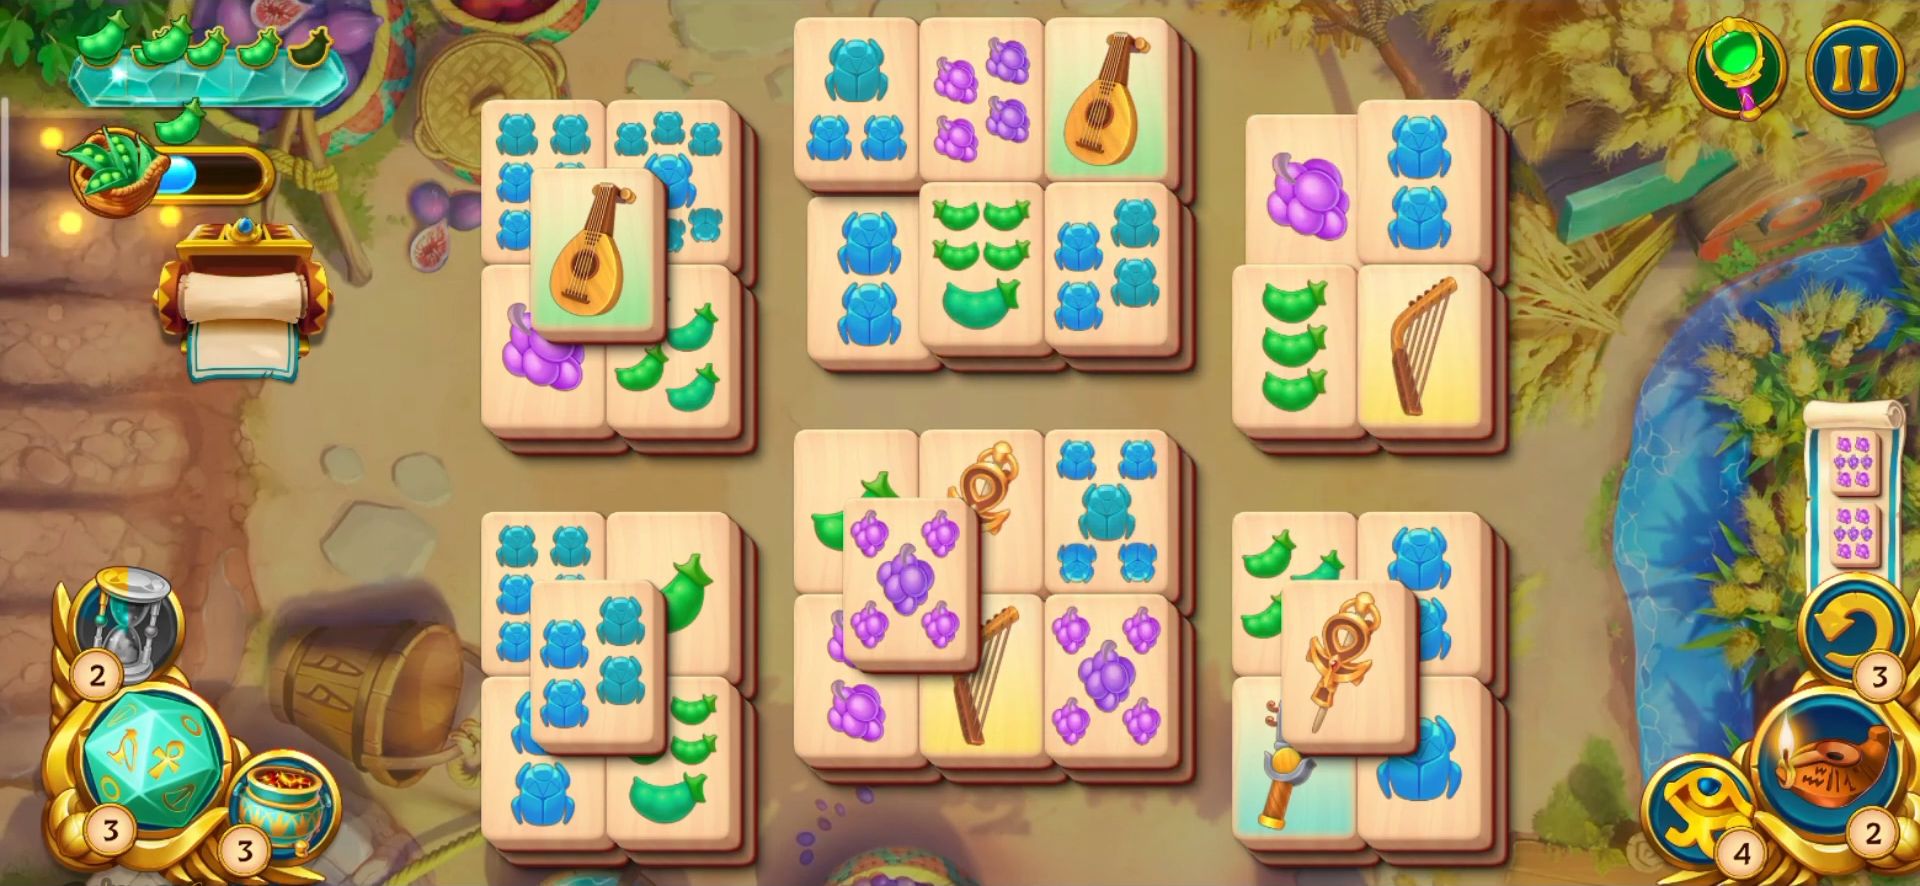 Pyramid of Mahjong: tile matching puzzle free instals